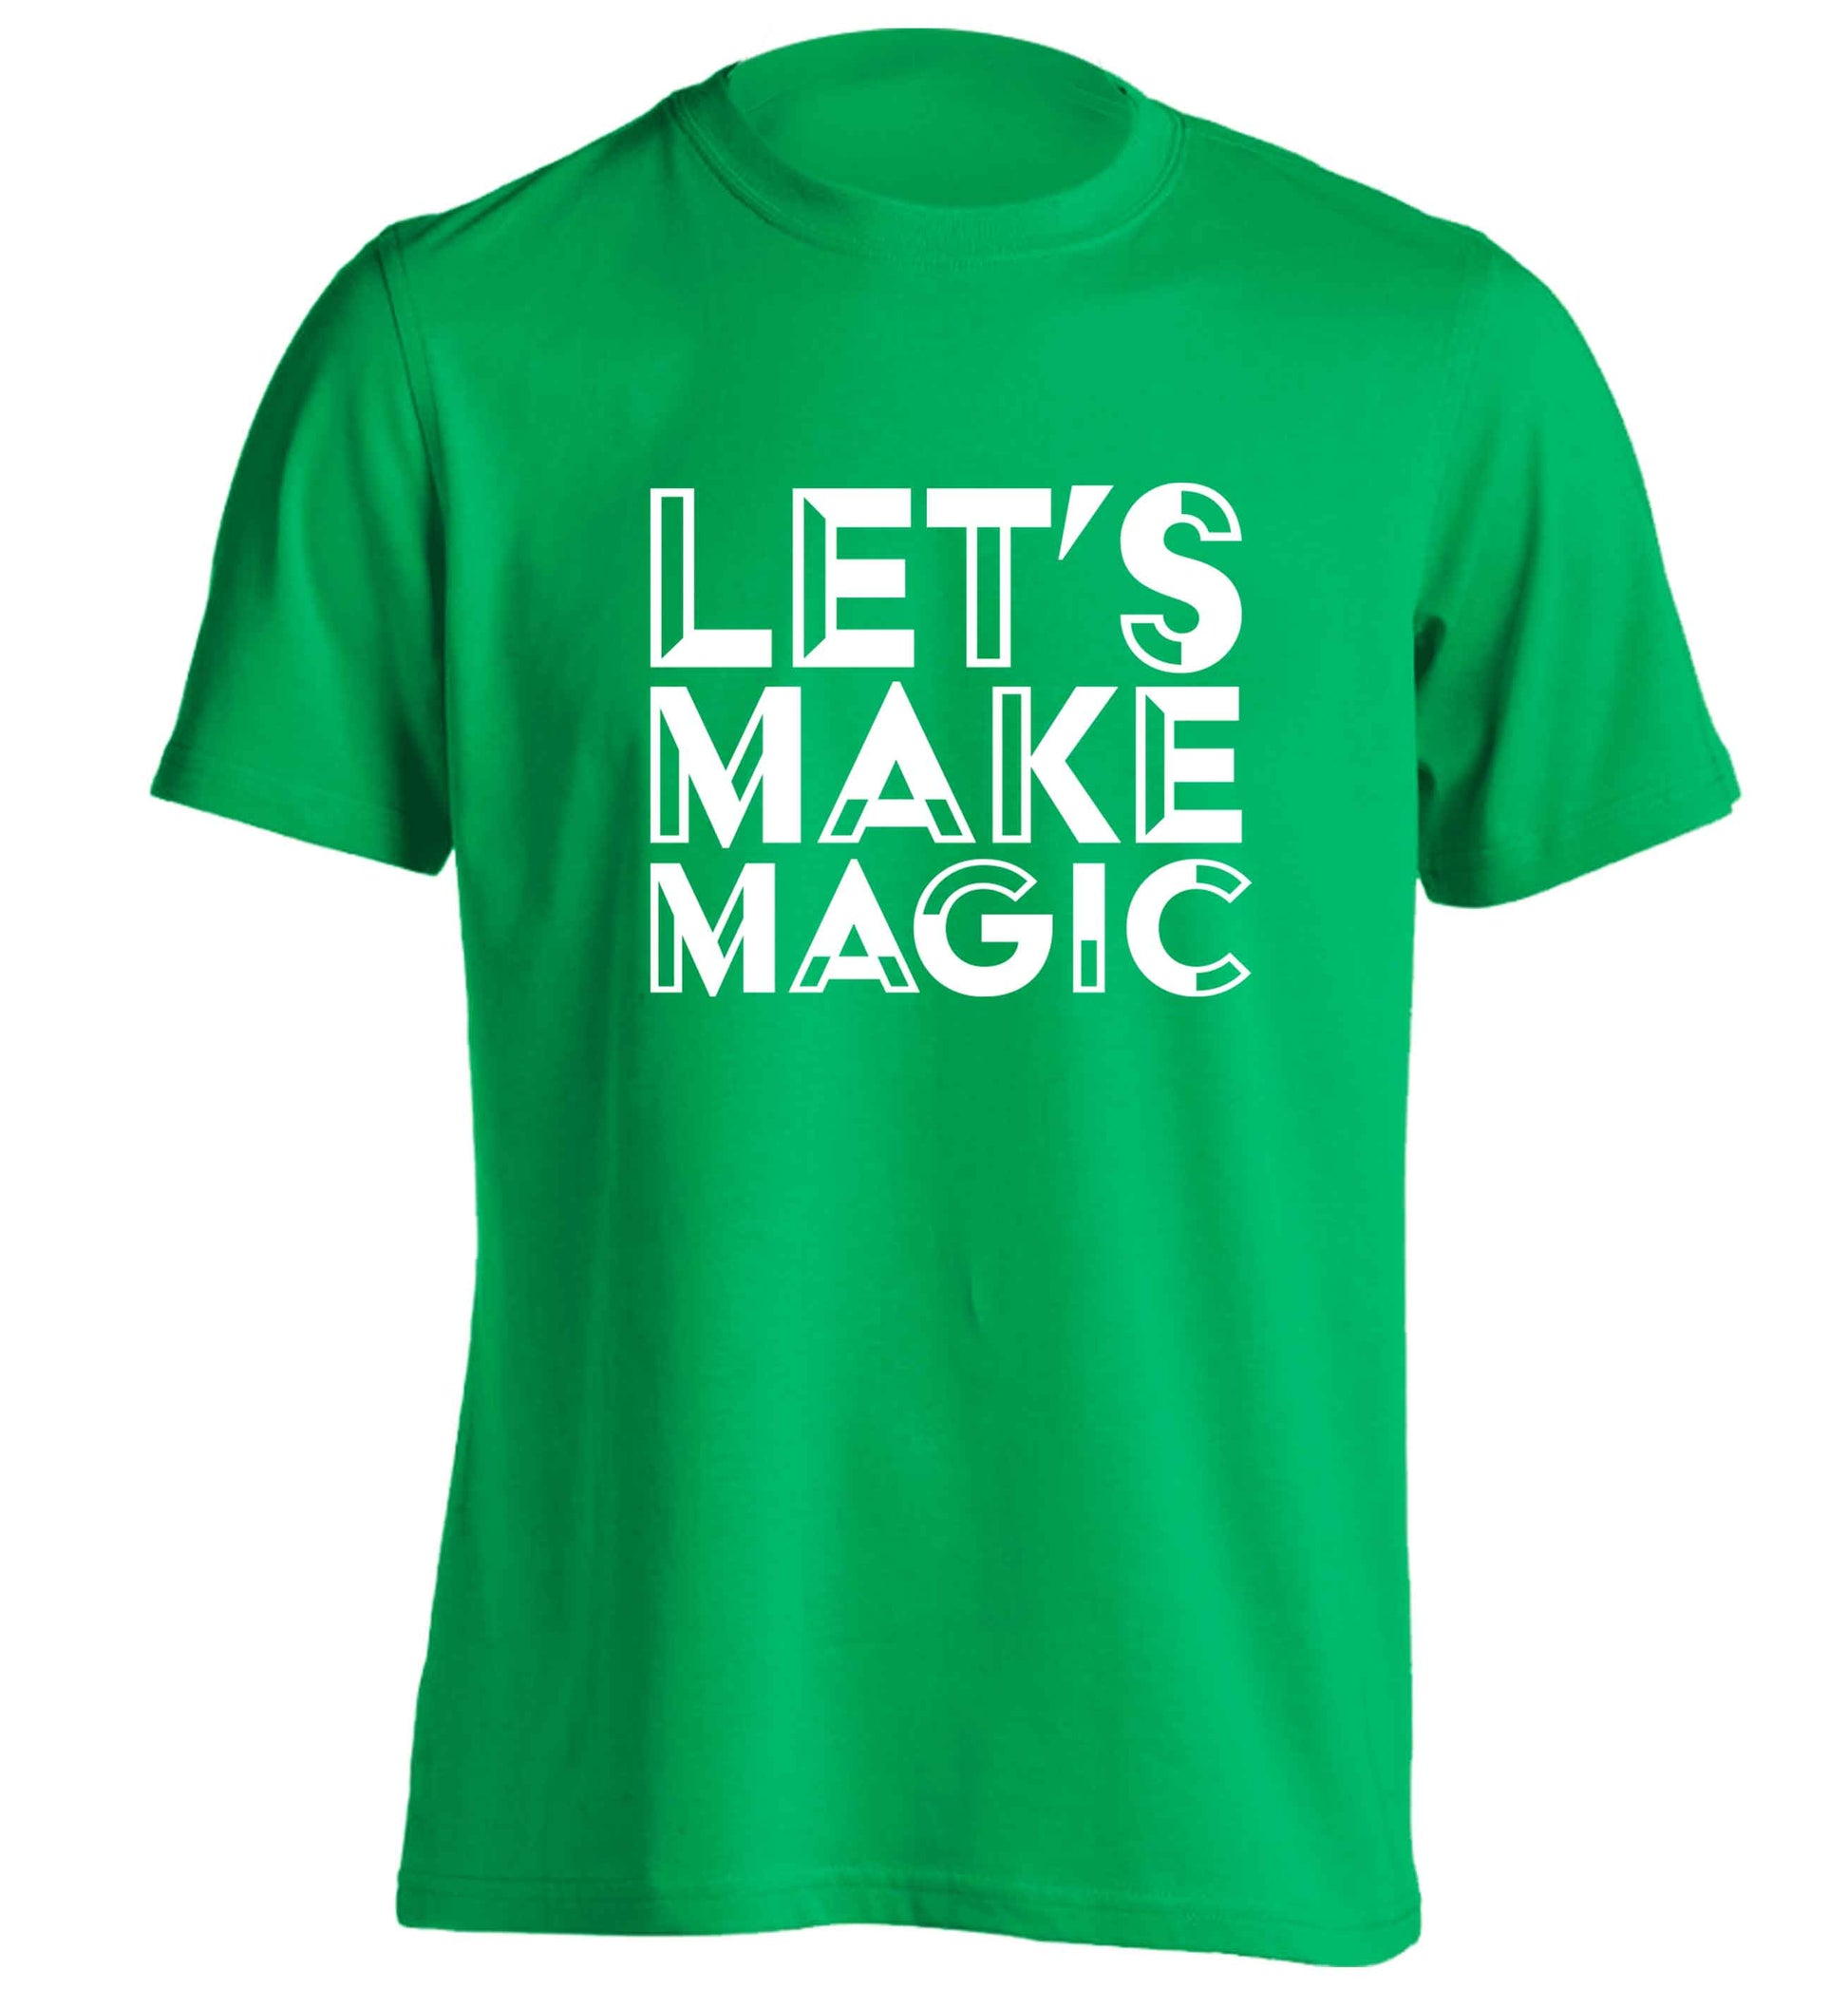 Let's make magic adults unisex green Tshirt 2XL